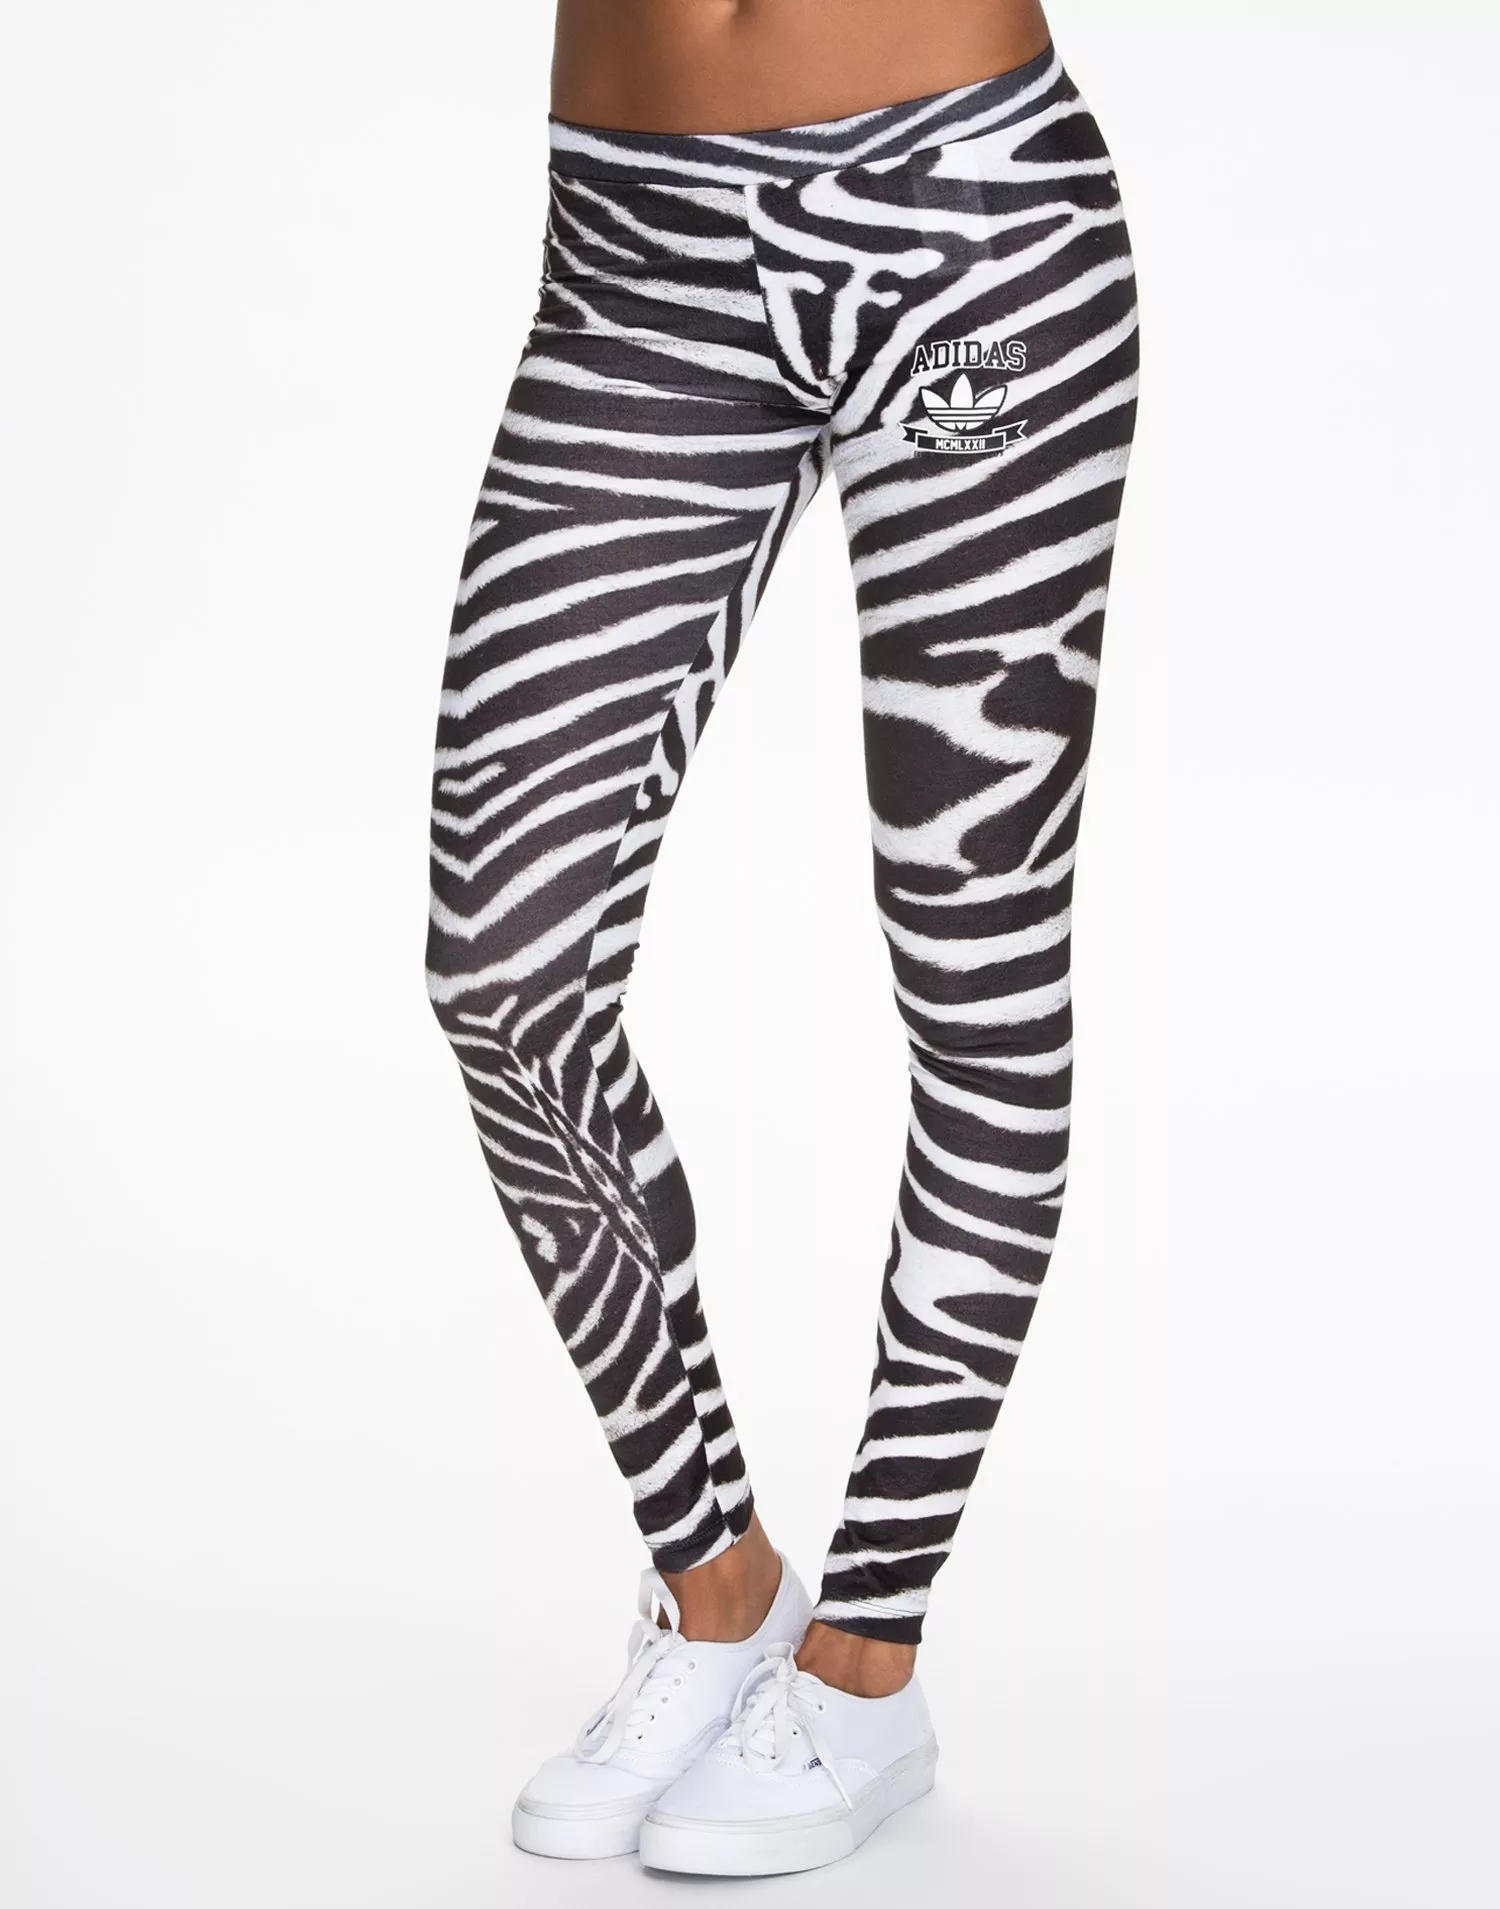 Buy Adidas Originals Zebra Leggings - Multicolour | Nelly.com